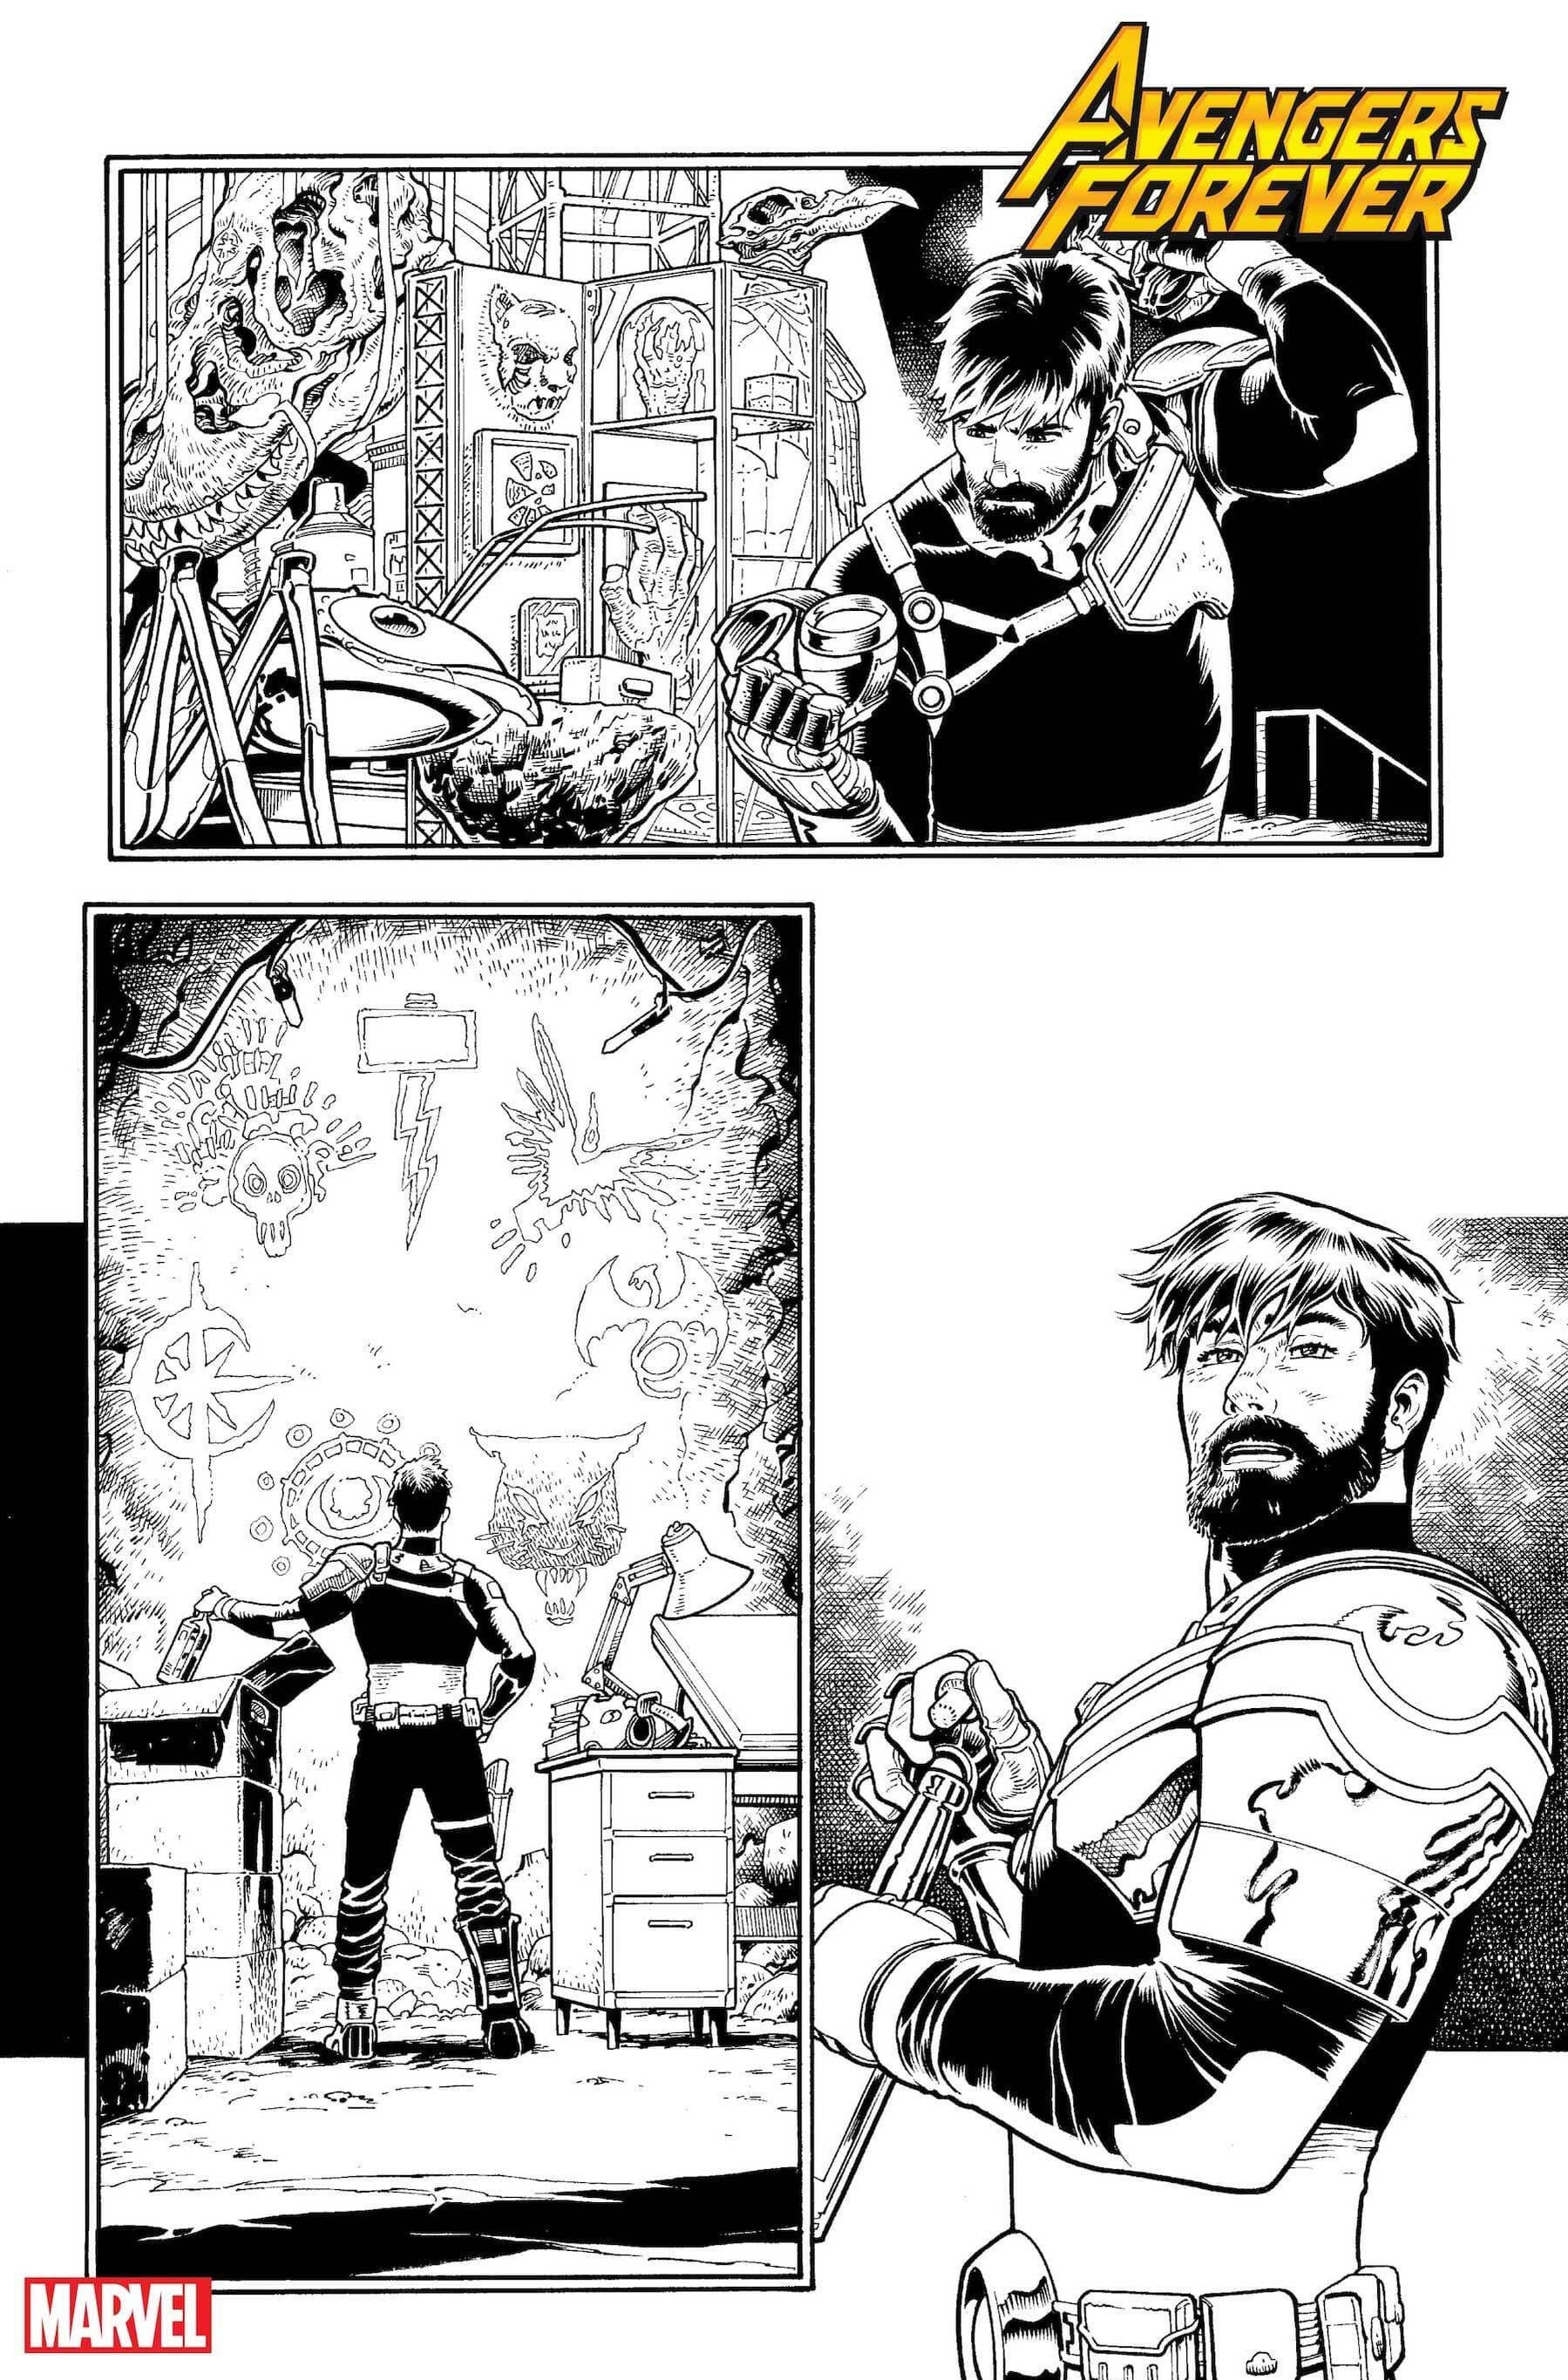 avengers-forever-1-preview-page-4-tony-stark-ant-man.jpg